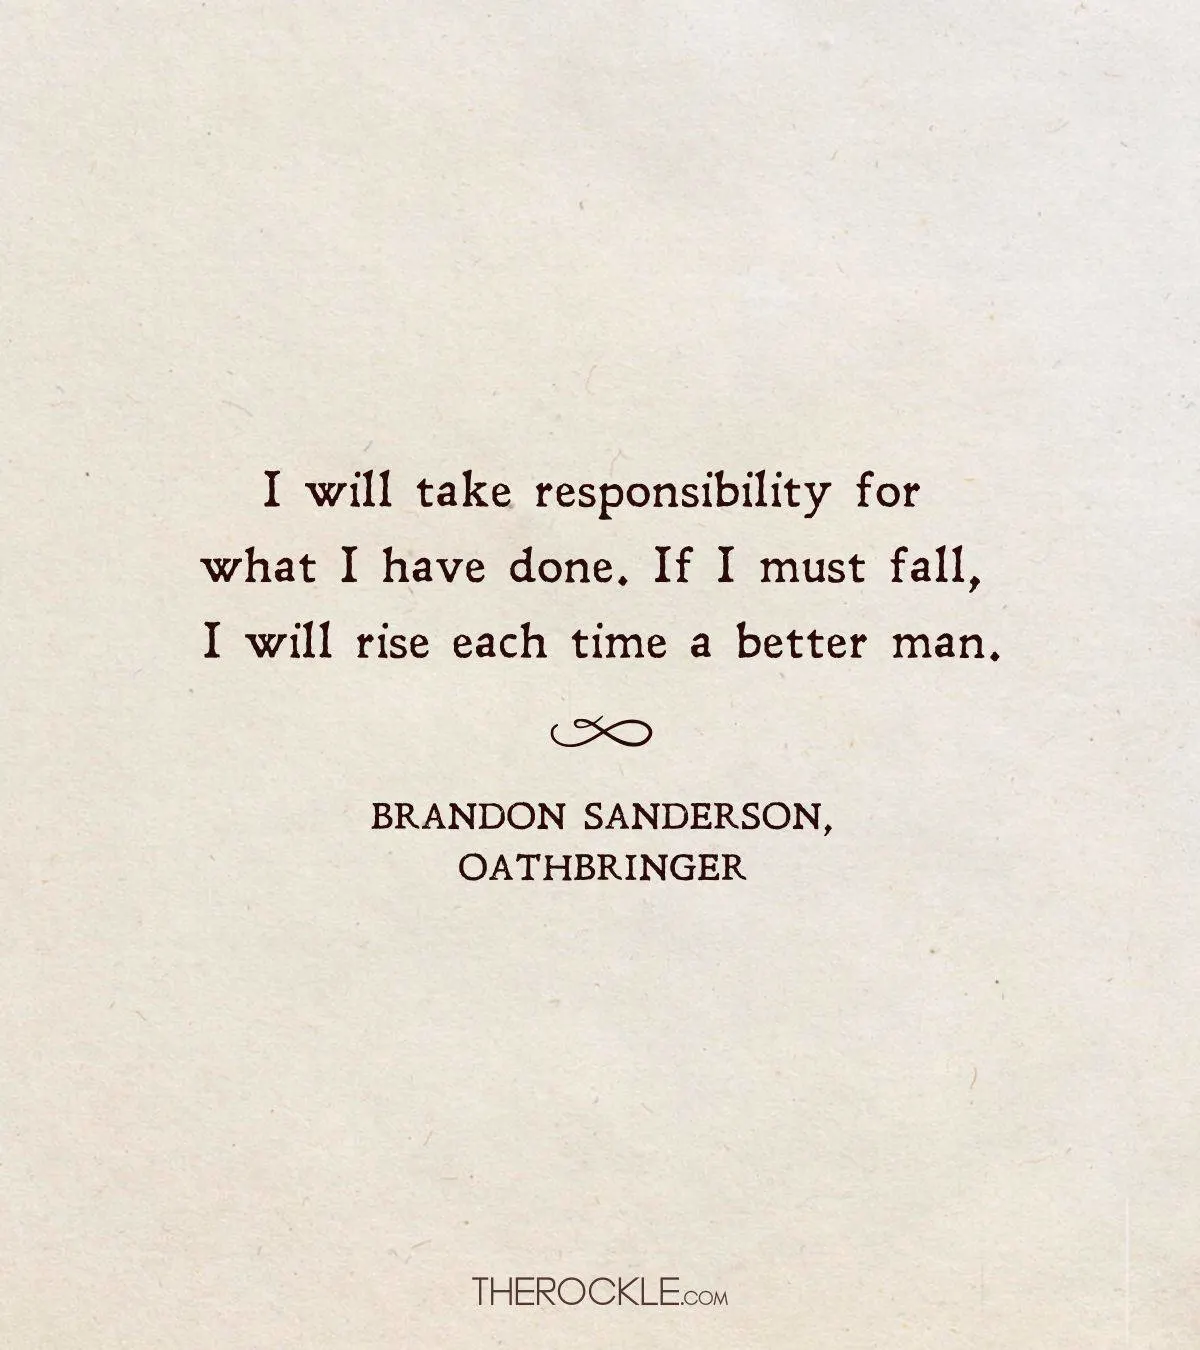 Sanderson quote on self-accountability